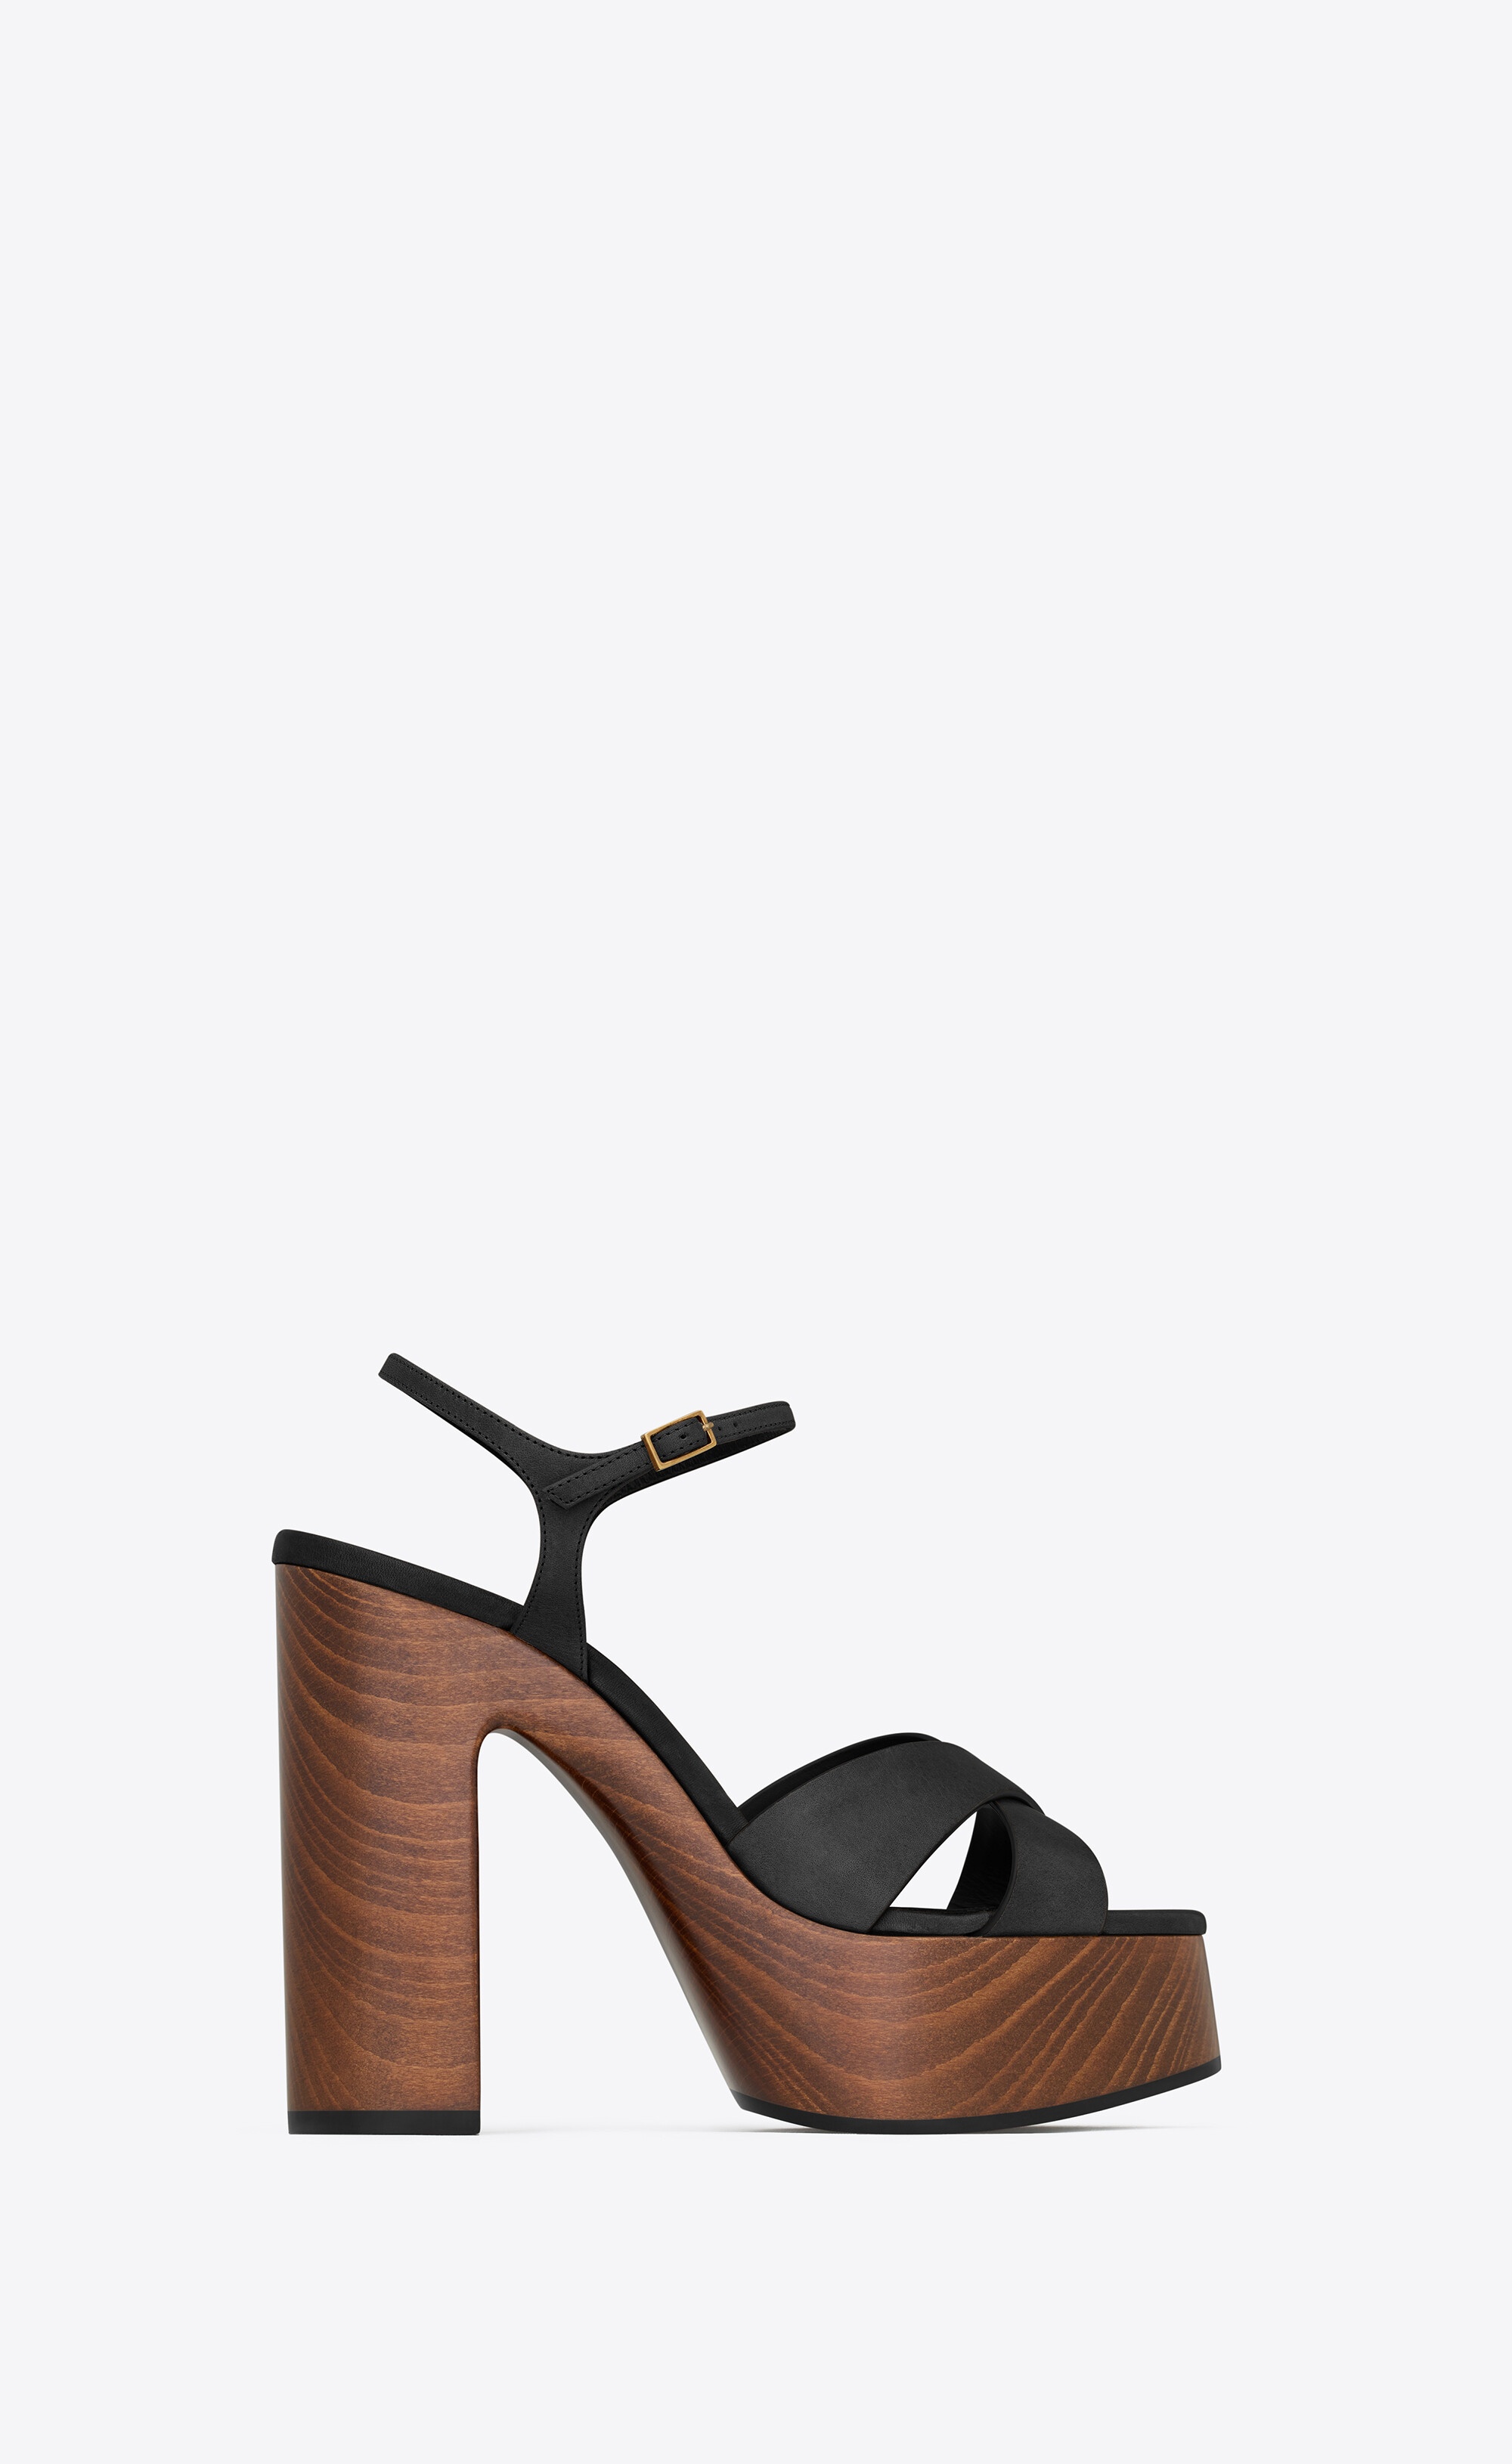 bianca platform sandals in smooth leather - 1